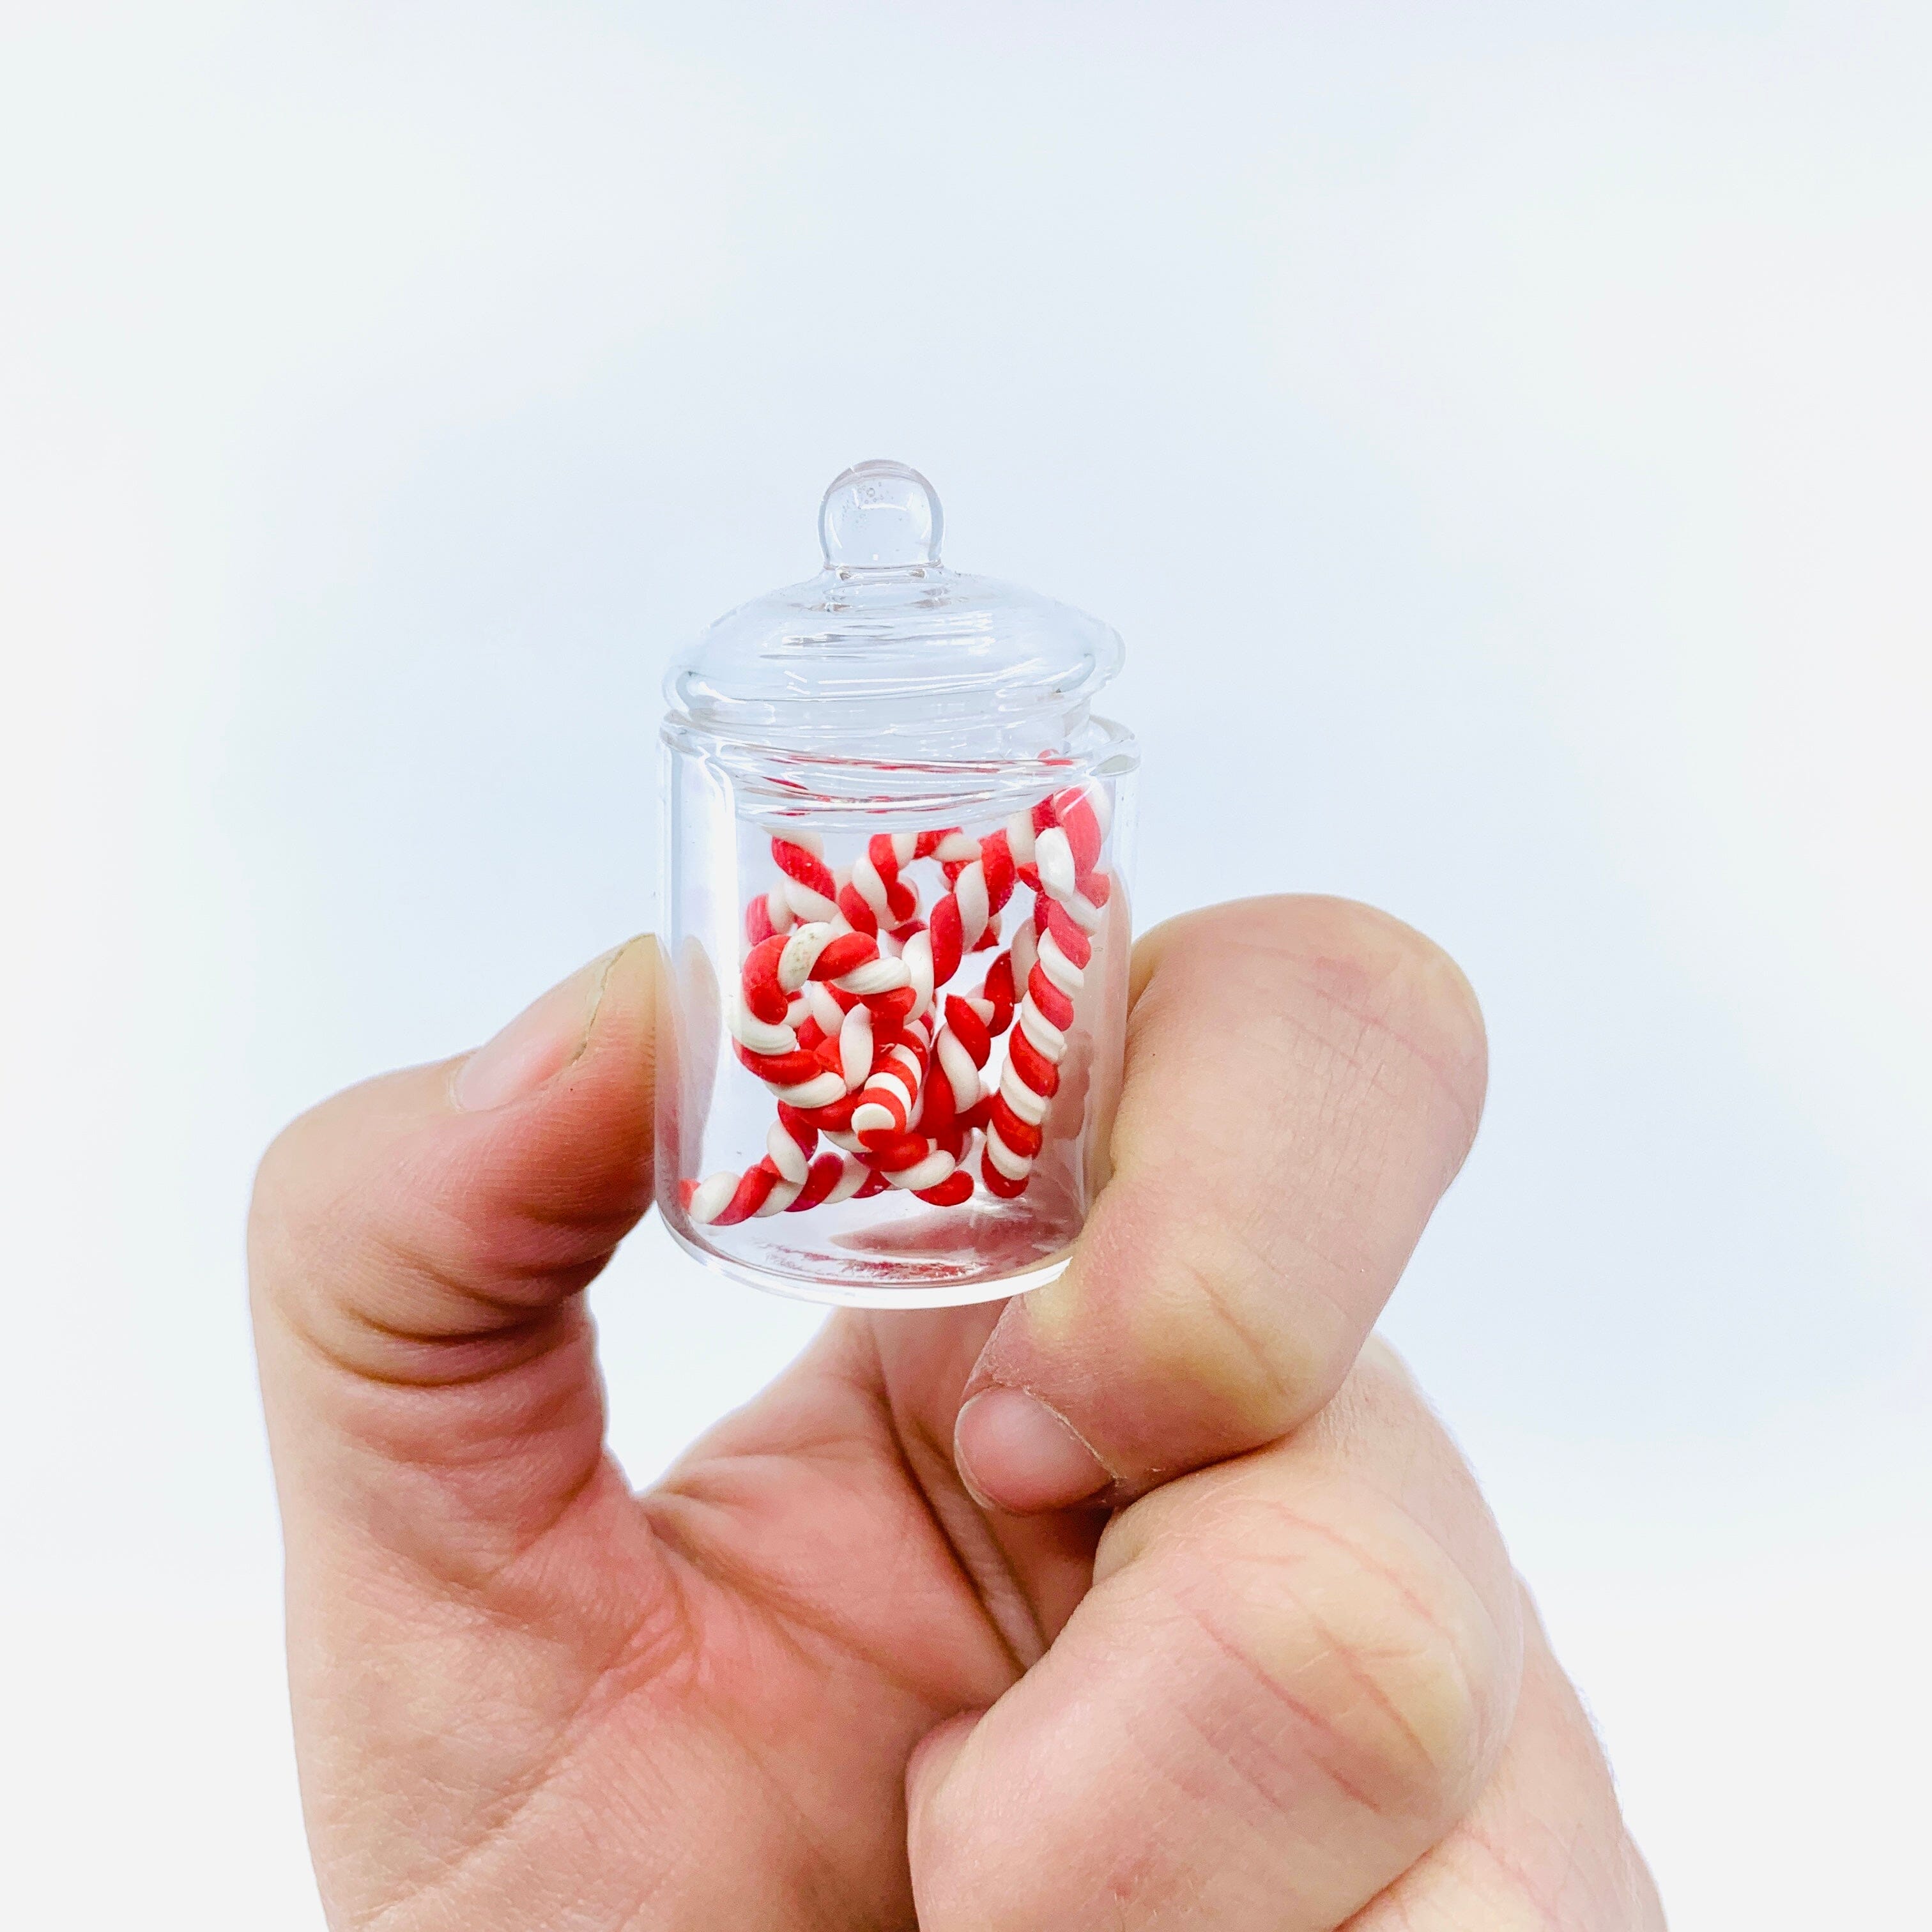 Tiny Animal Glass Straw, Candy Cane - Luke Adams Glass Blowing Studio